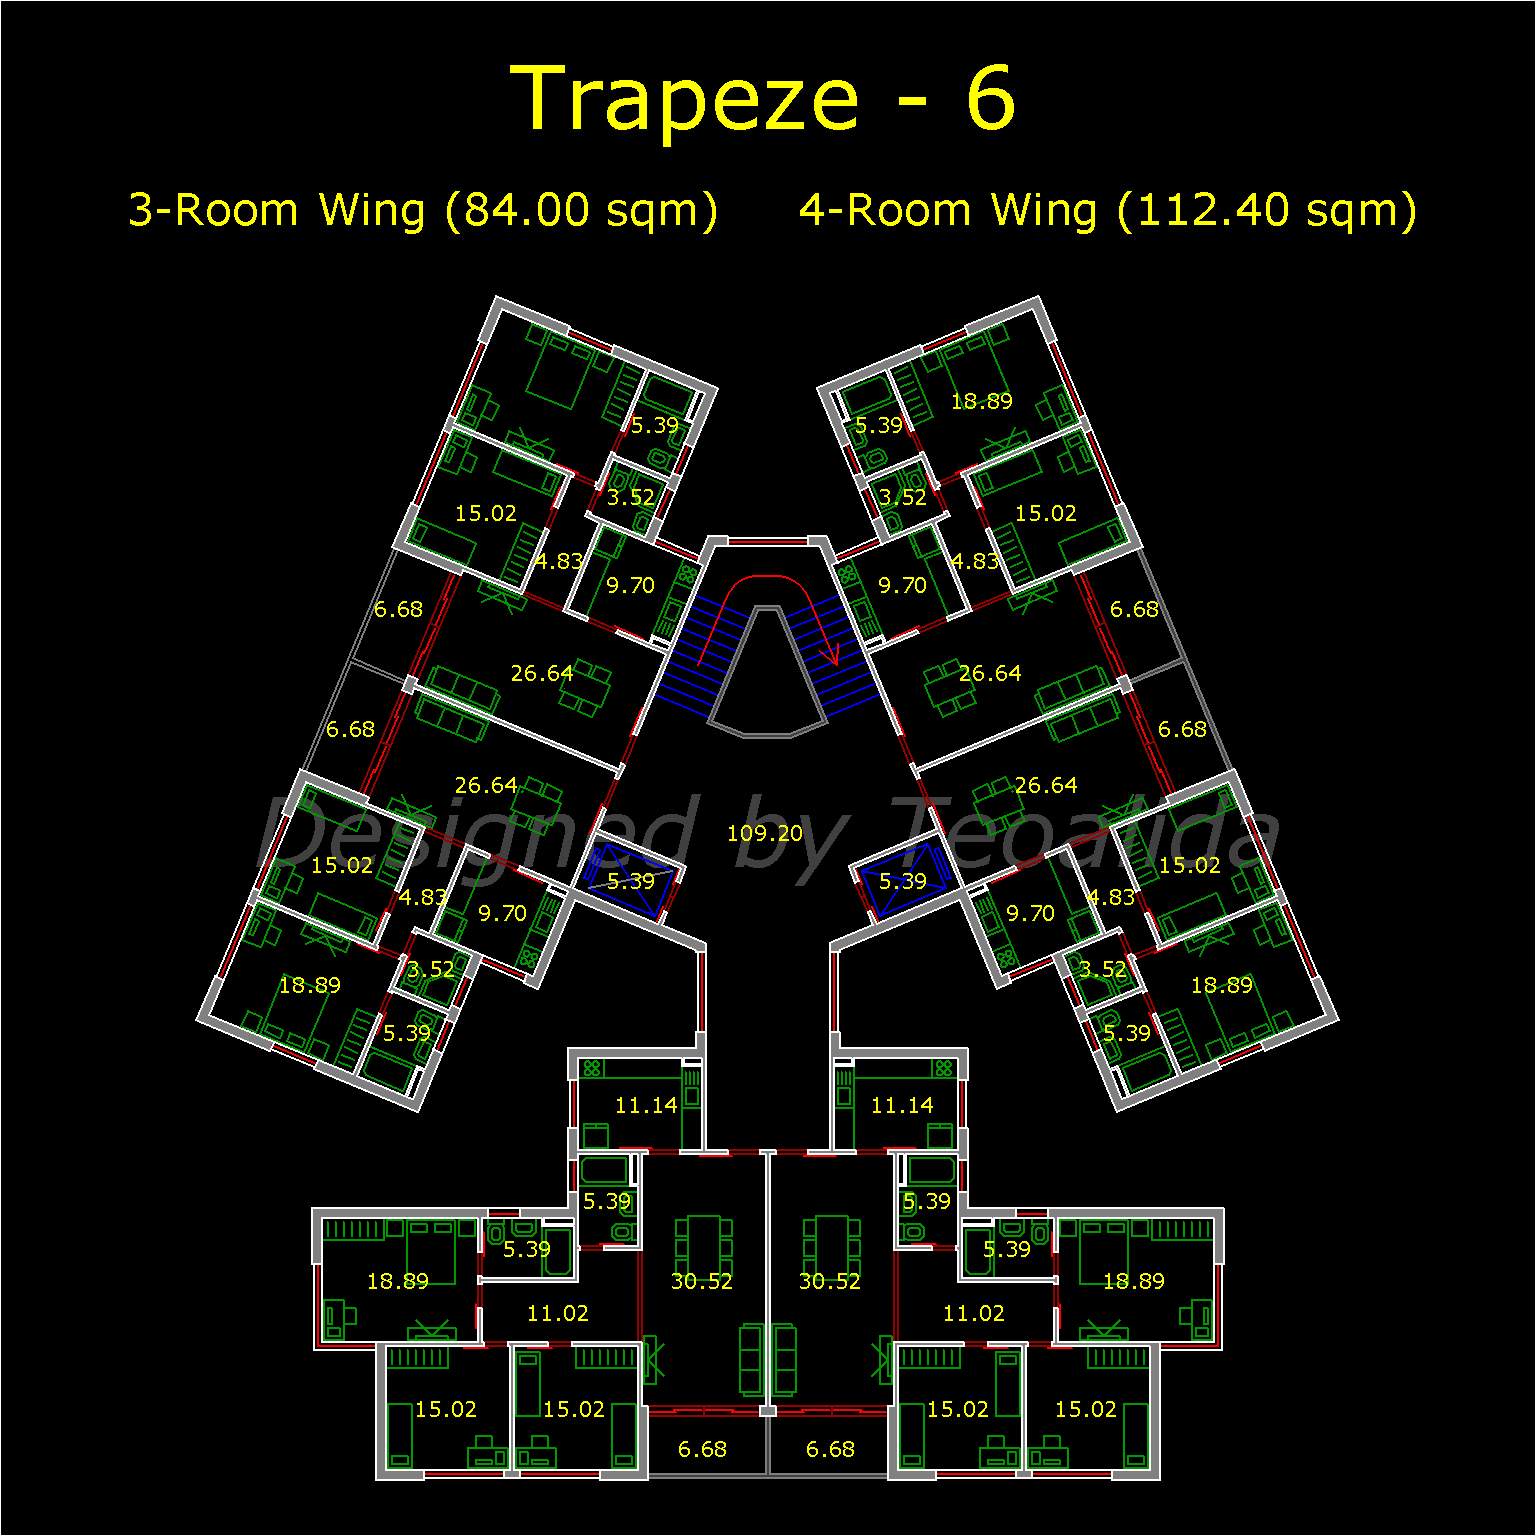 Trapeze tower, floor plan